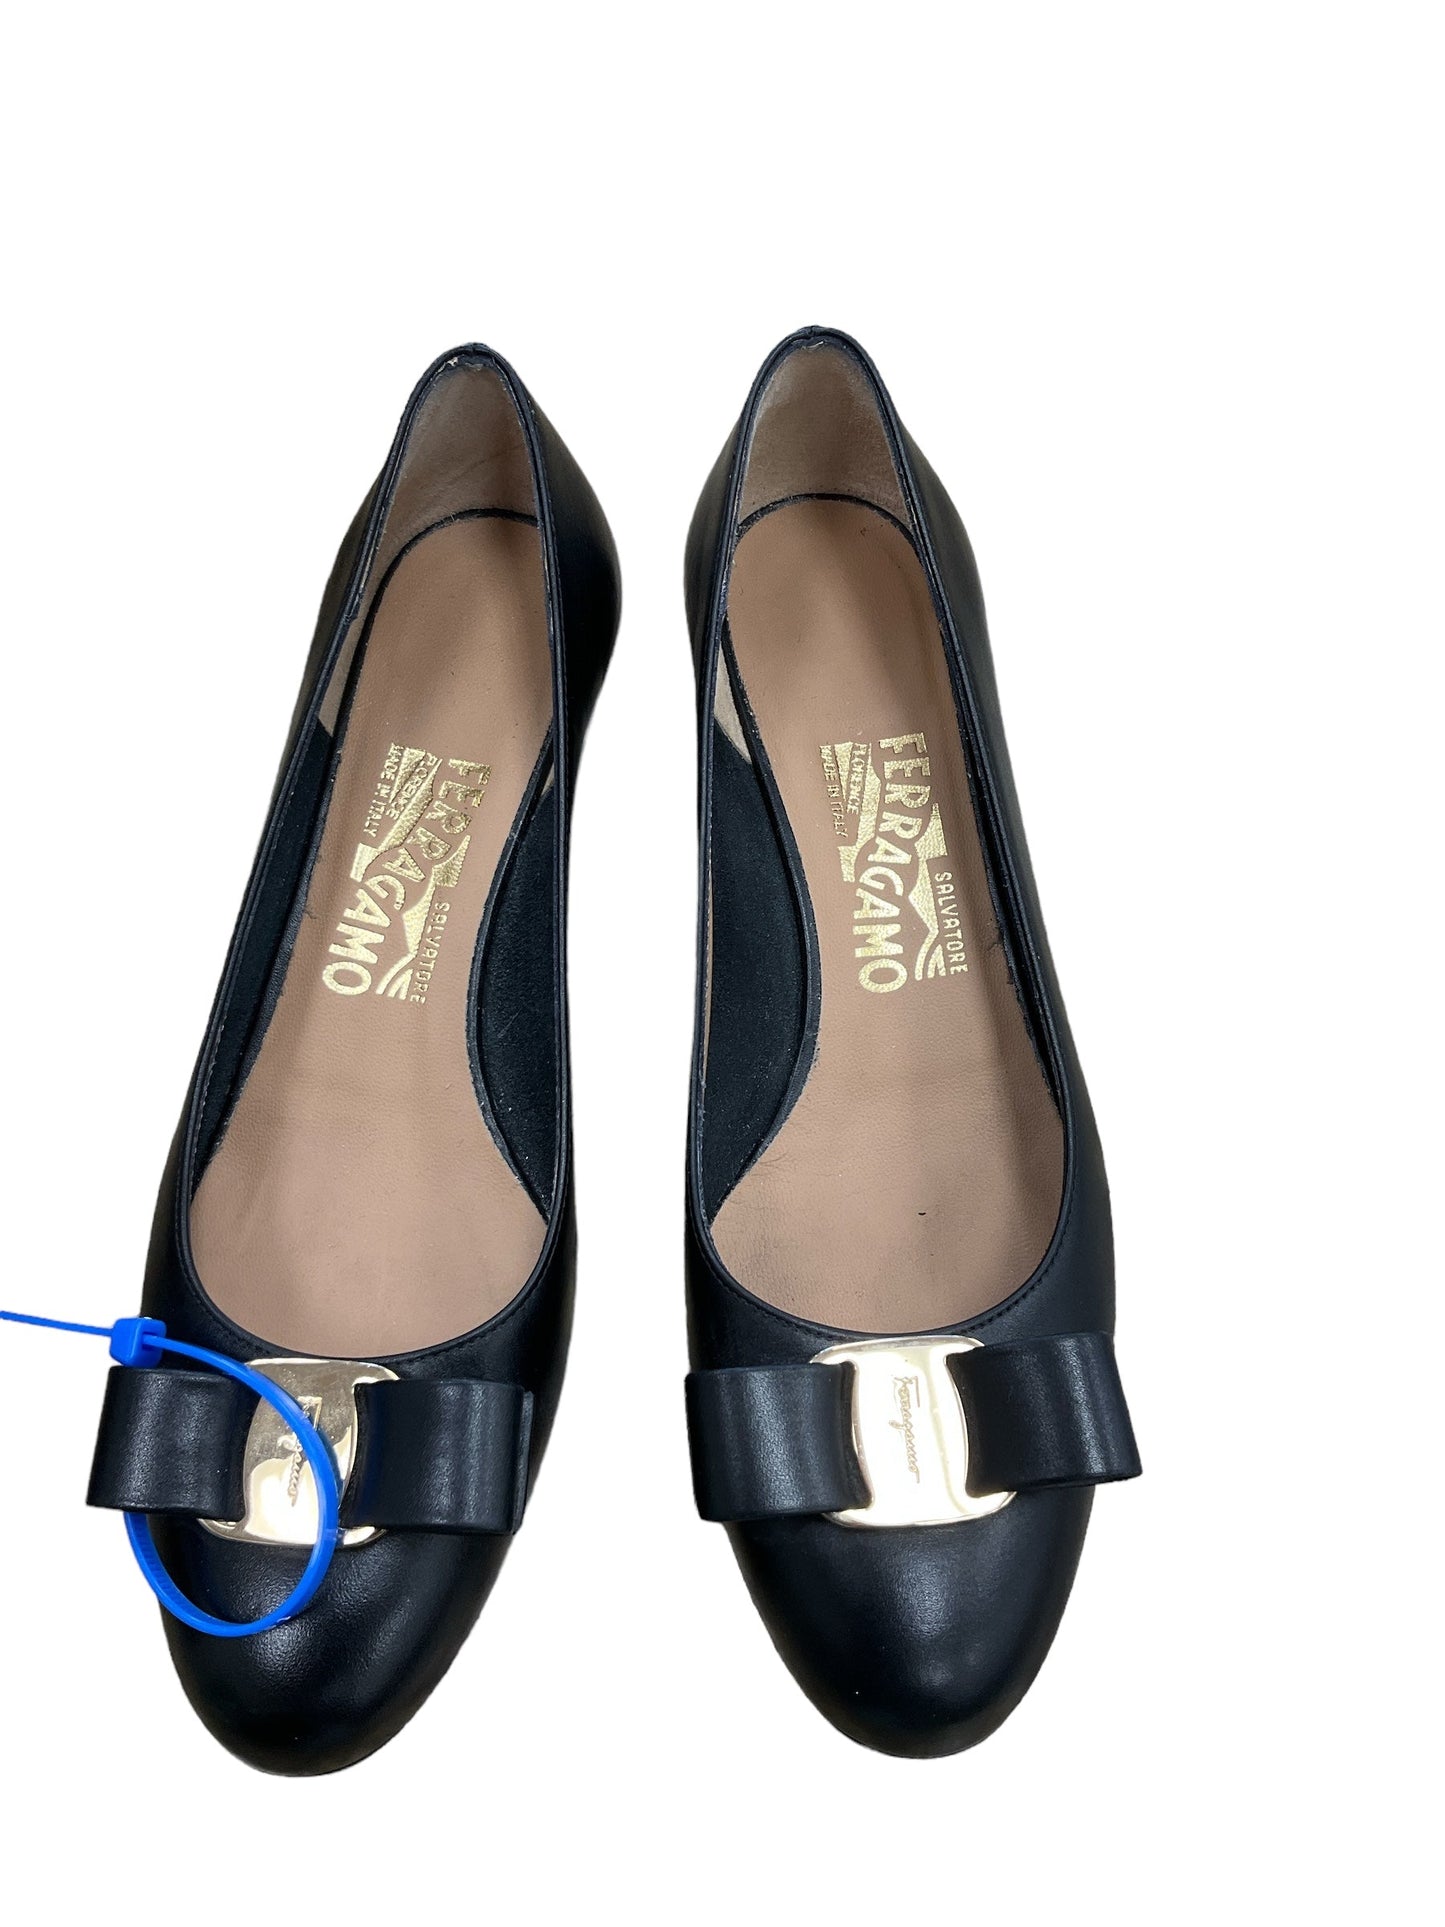 Black Shoes Heels Block Ferragamo, Size 6.5